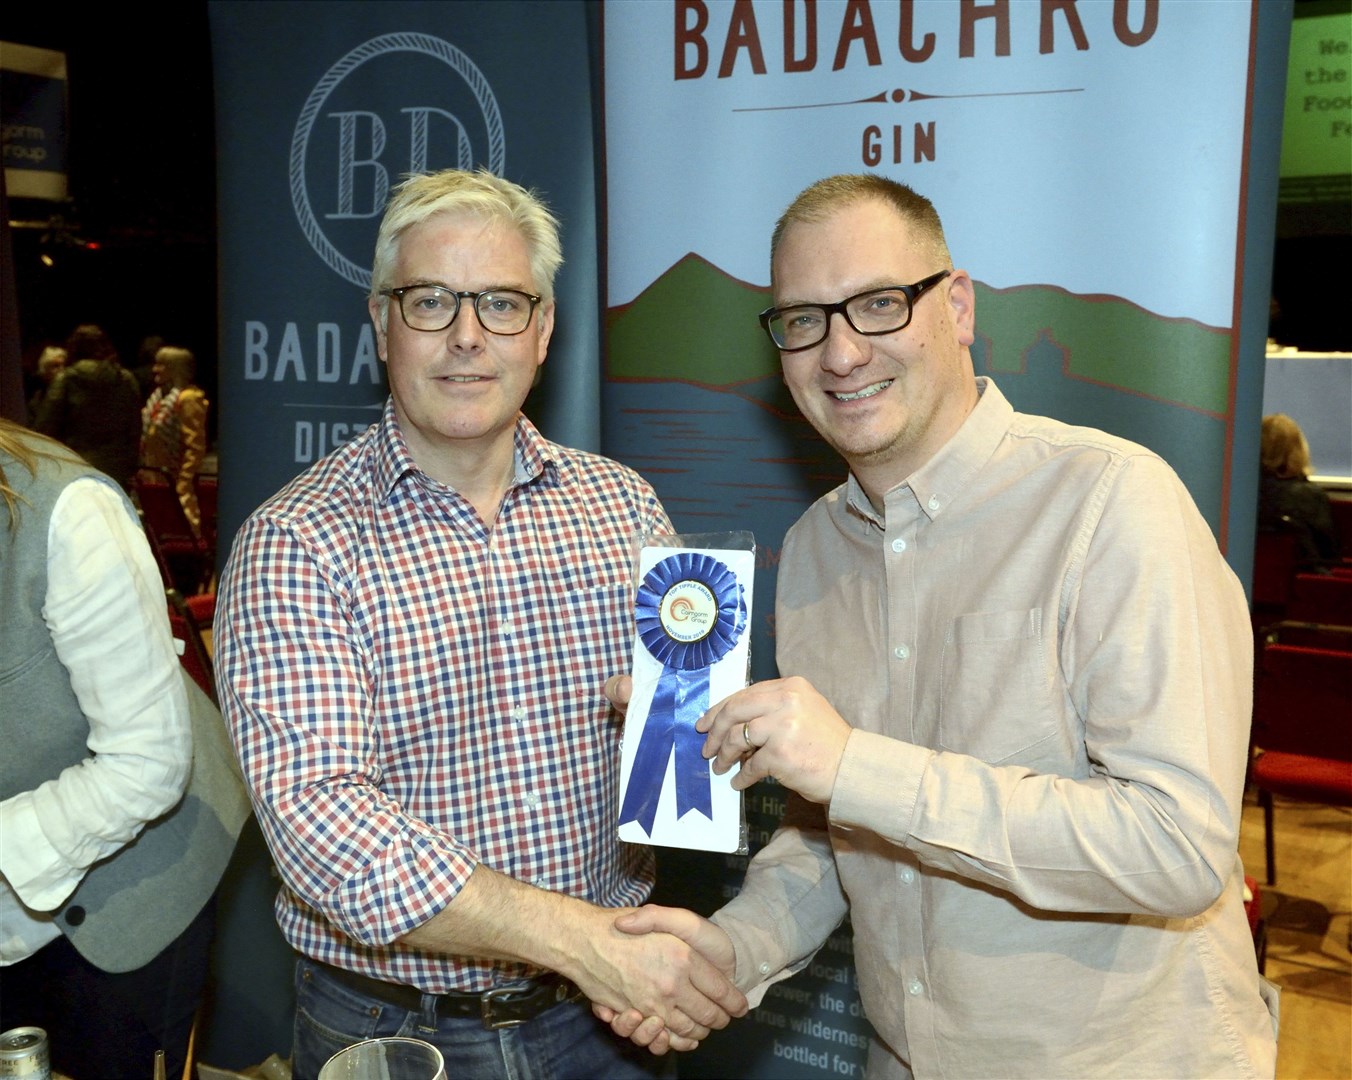 Gordon Quinn of Badachro Gin was another winner.